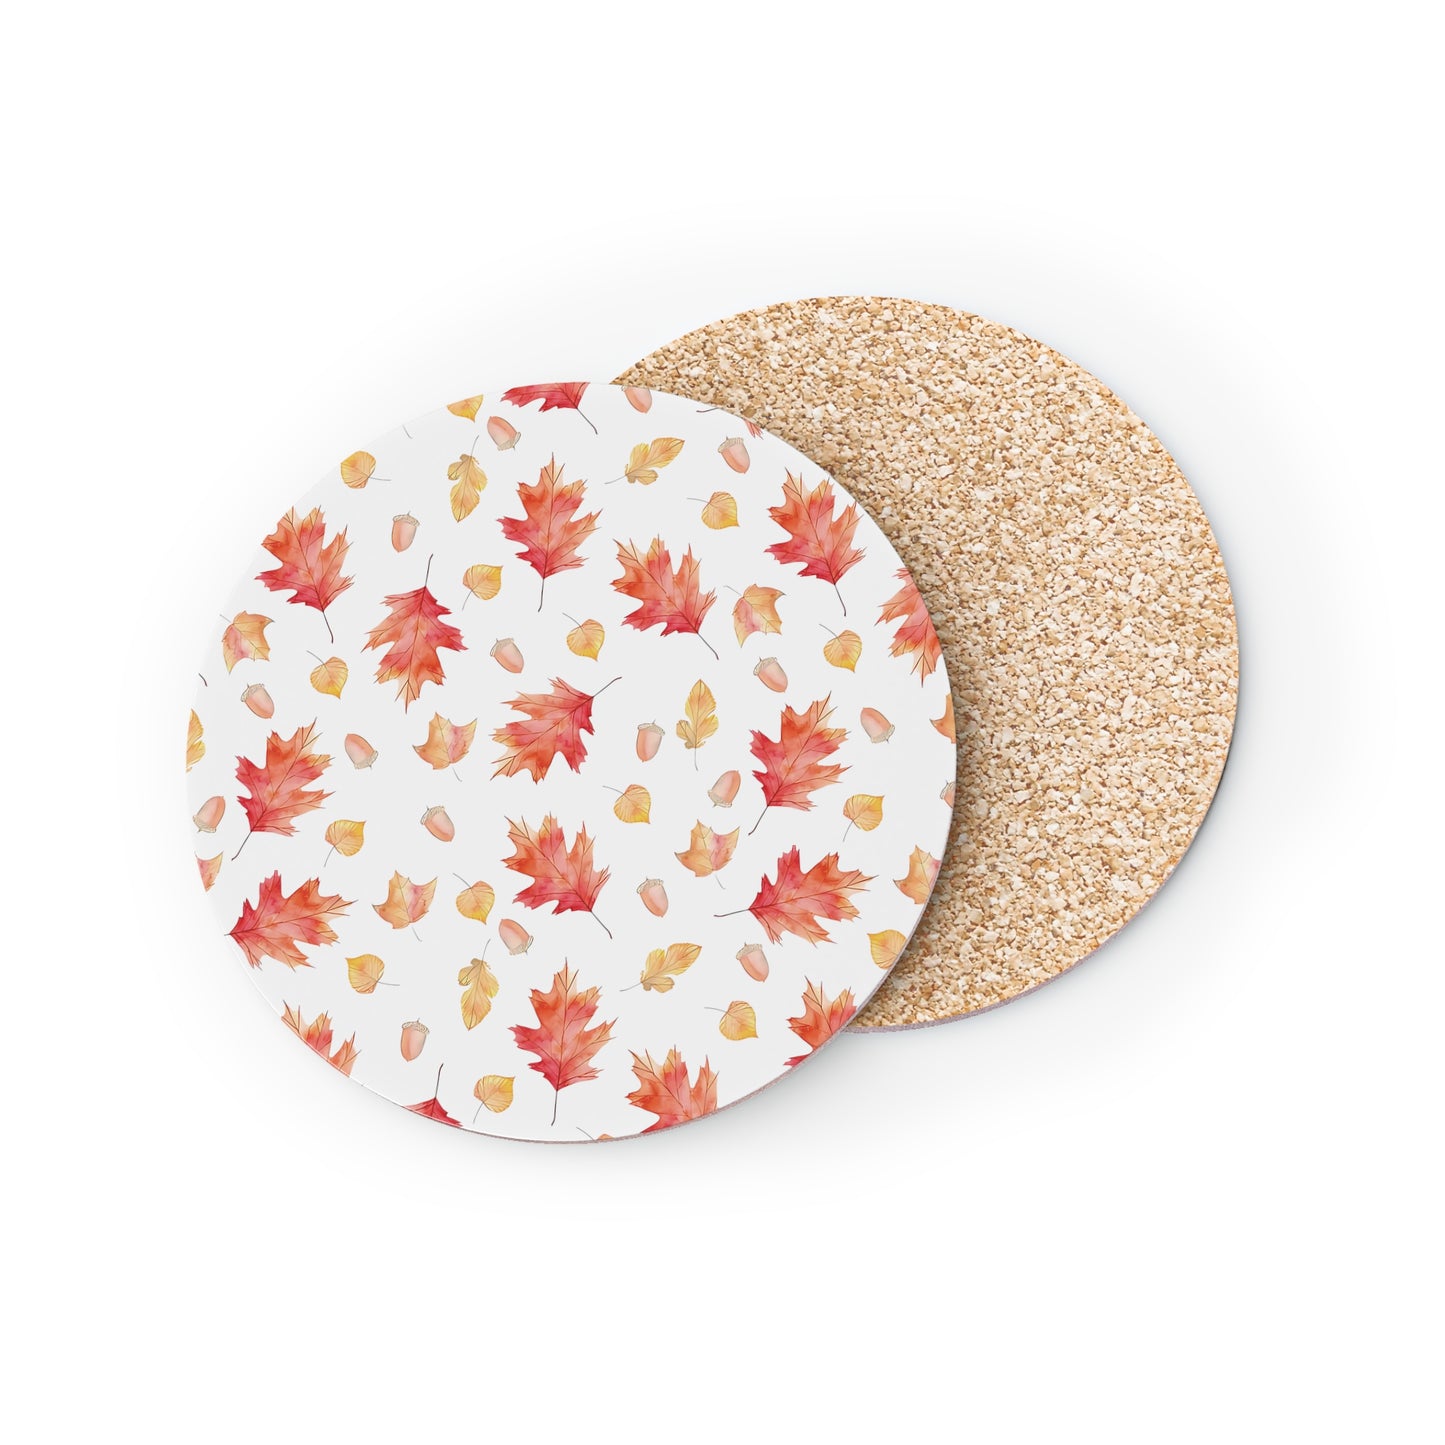 Autumn Leaves & Acorn Coasters